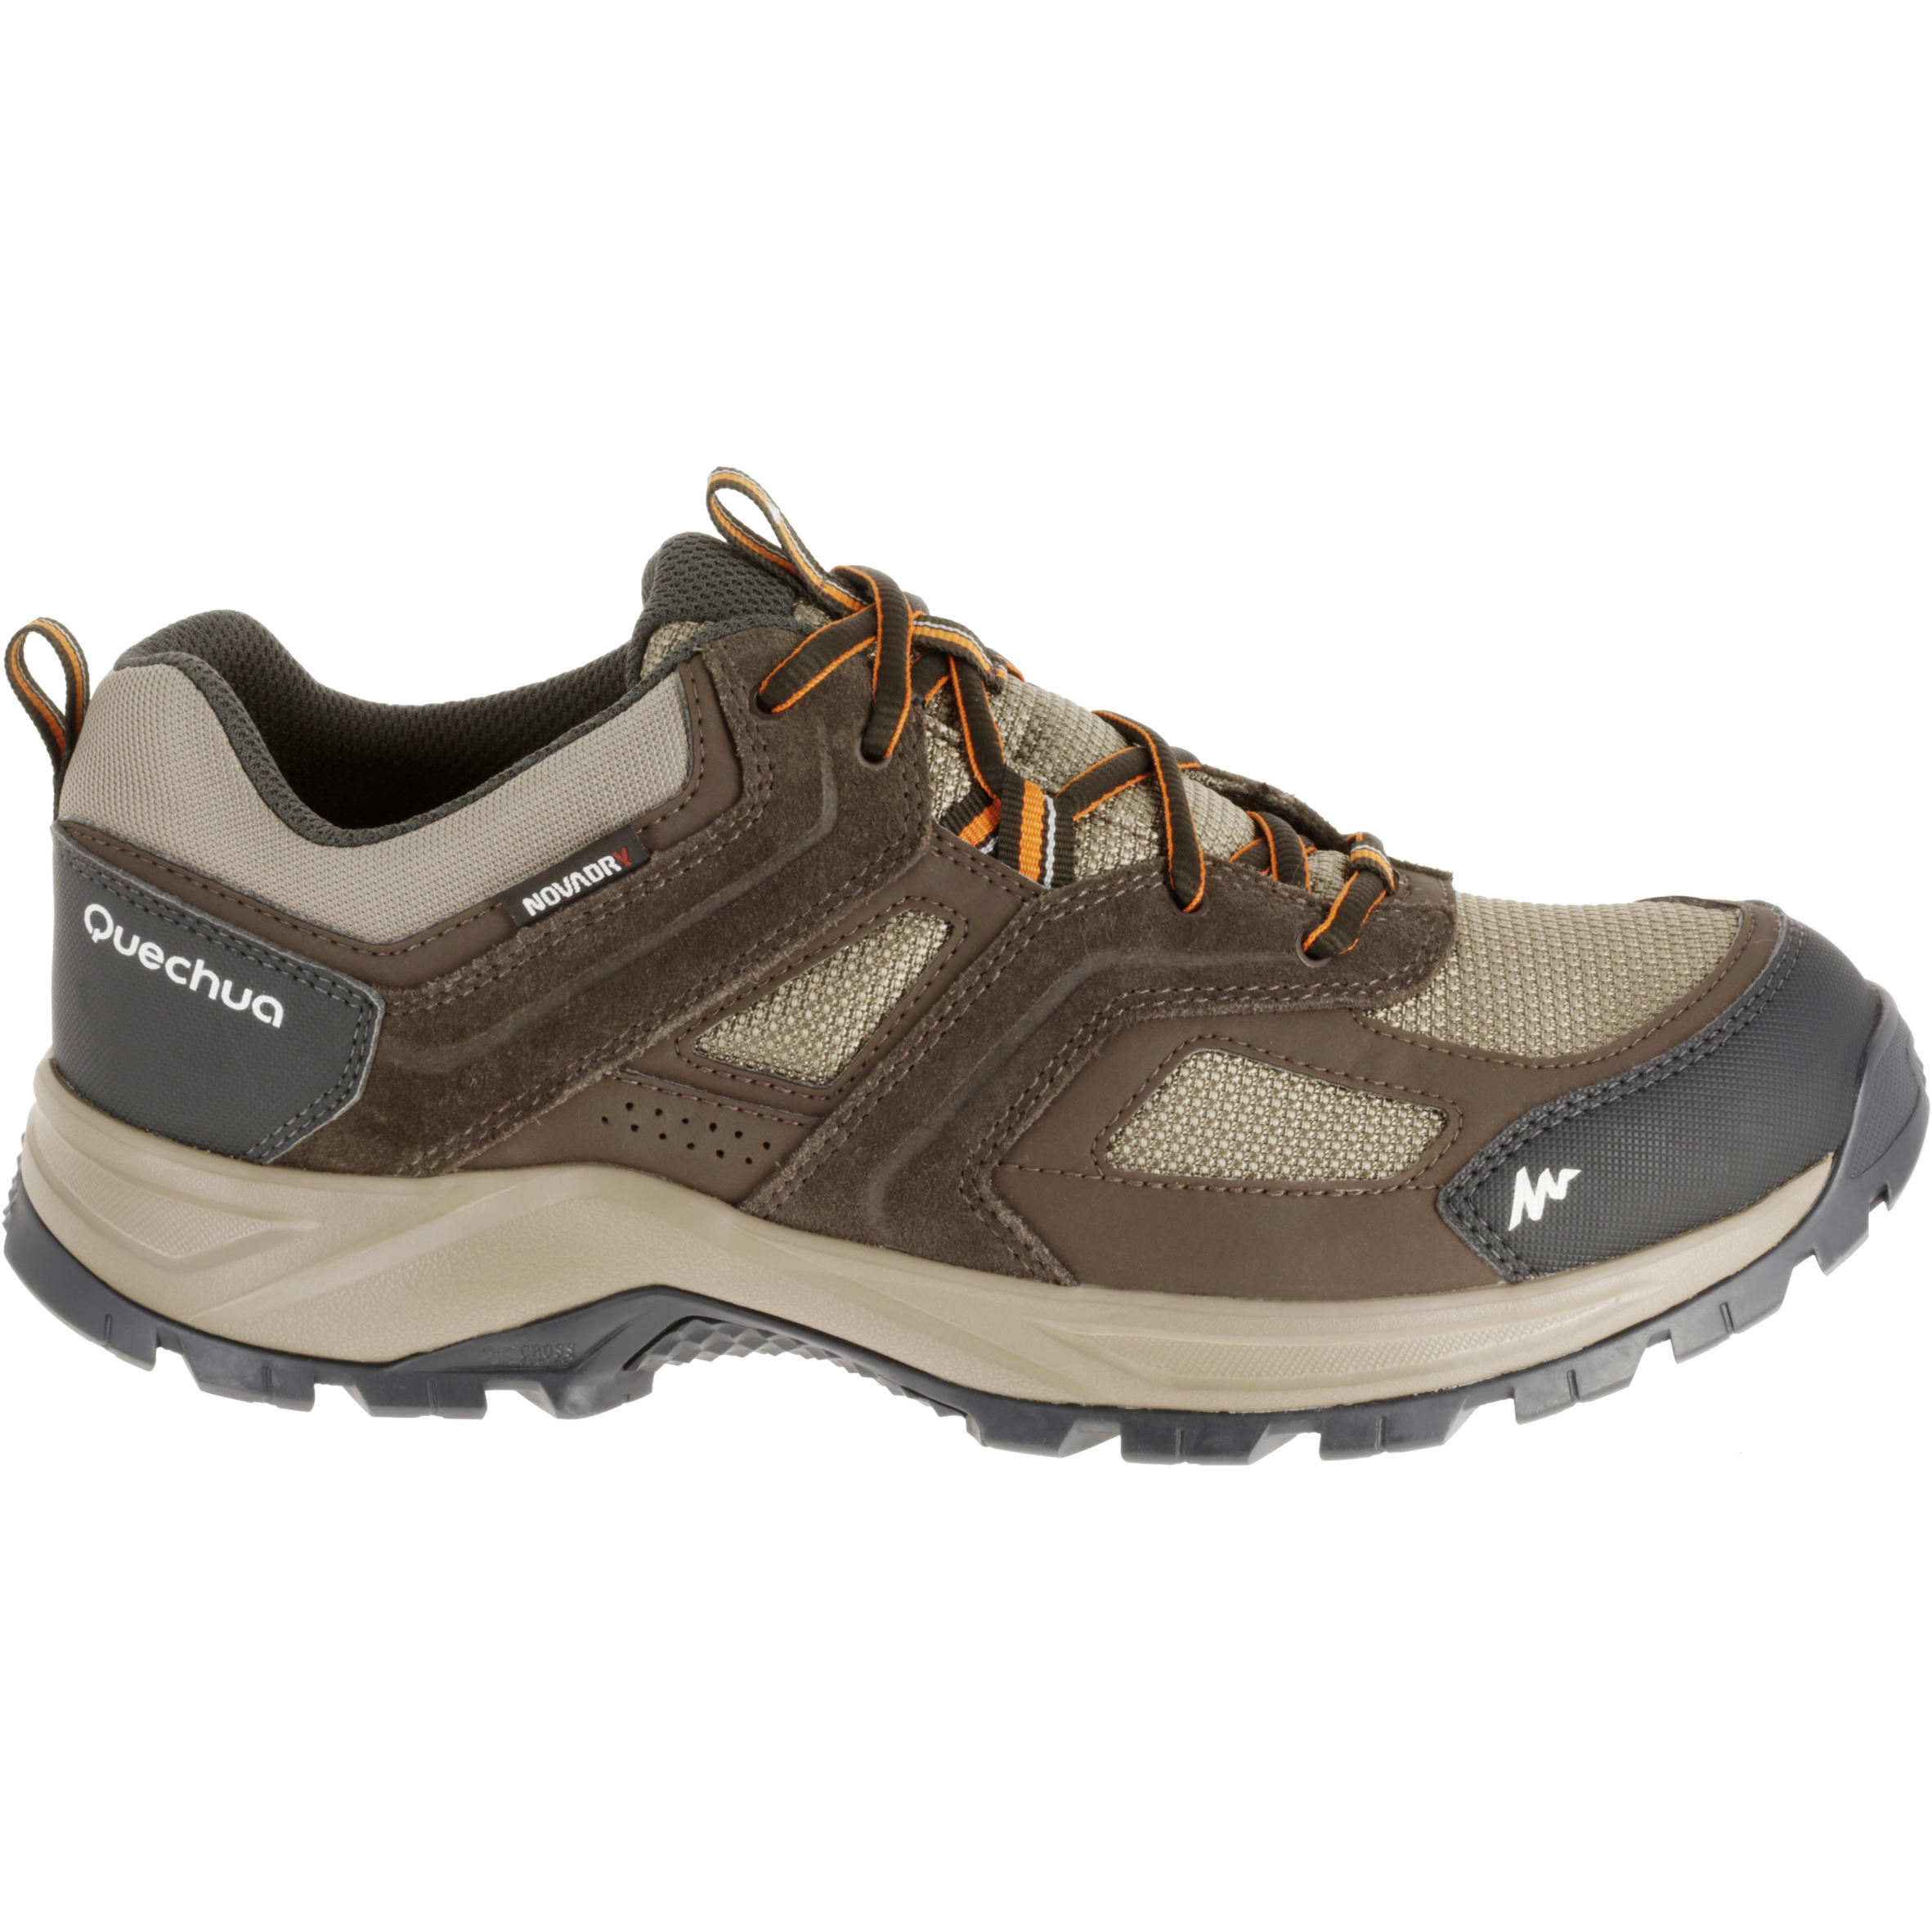 Forclaz 100 Male Waterproof Hiking Boot - Brown 2/13